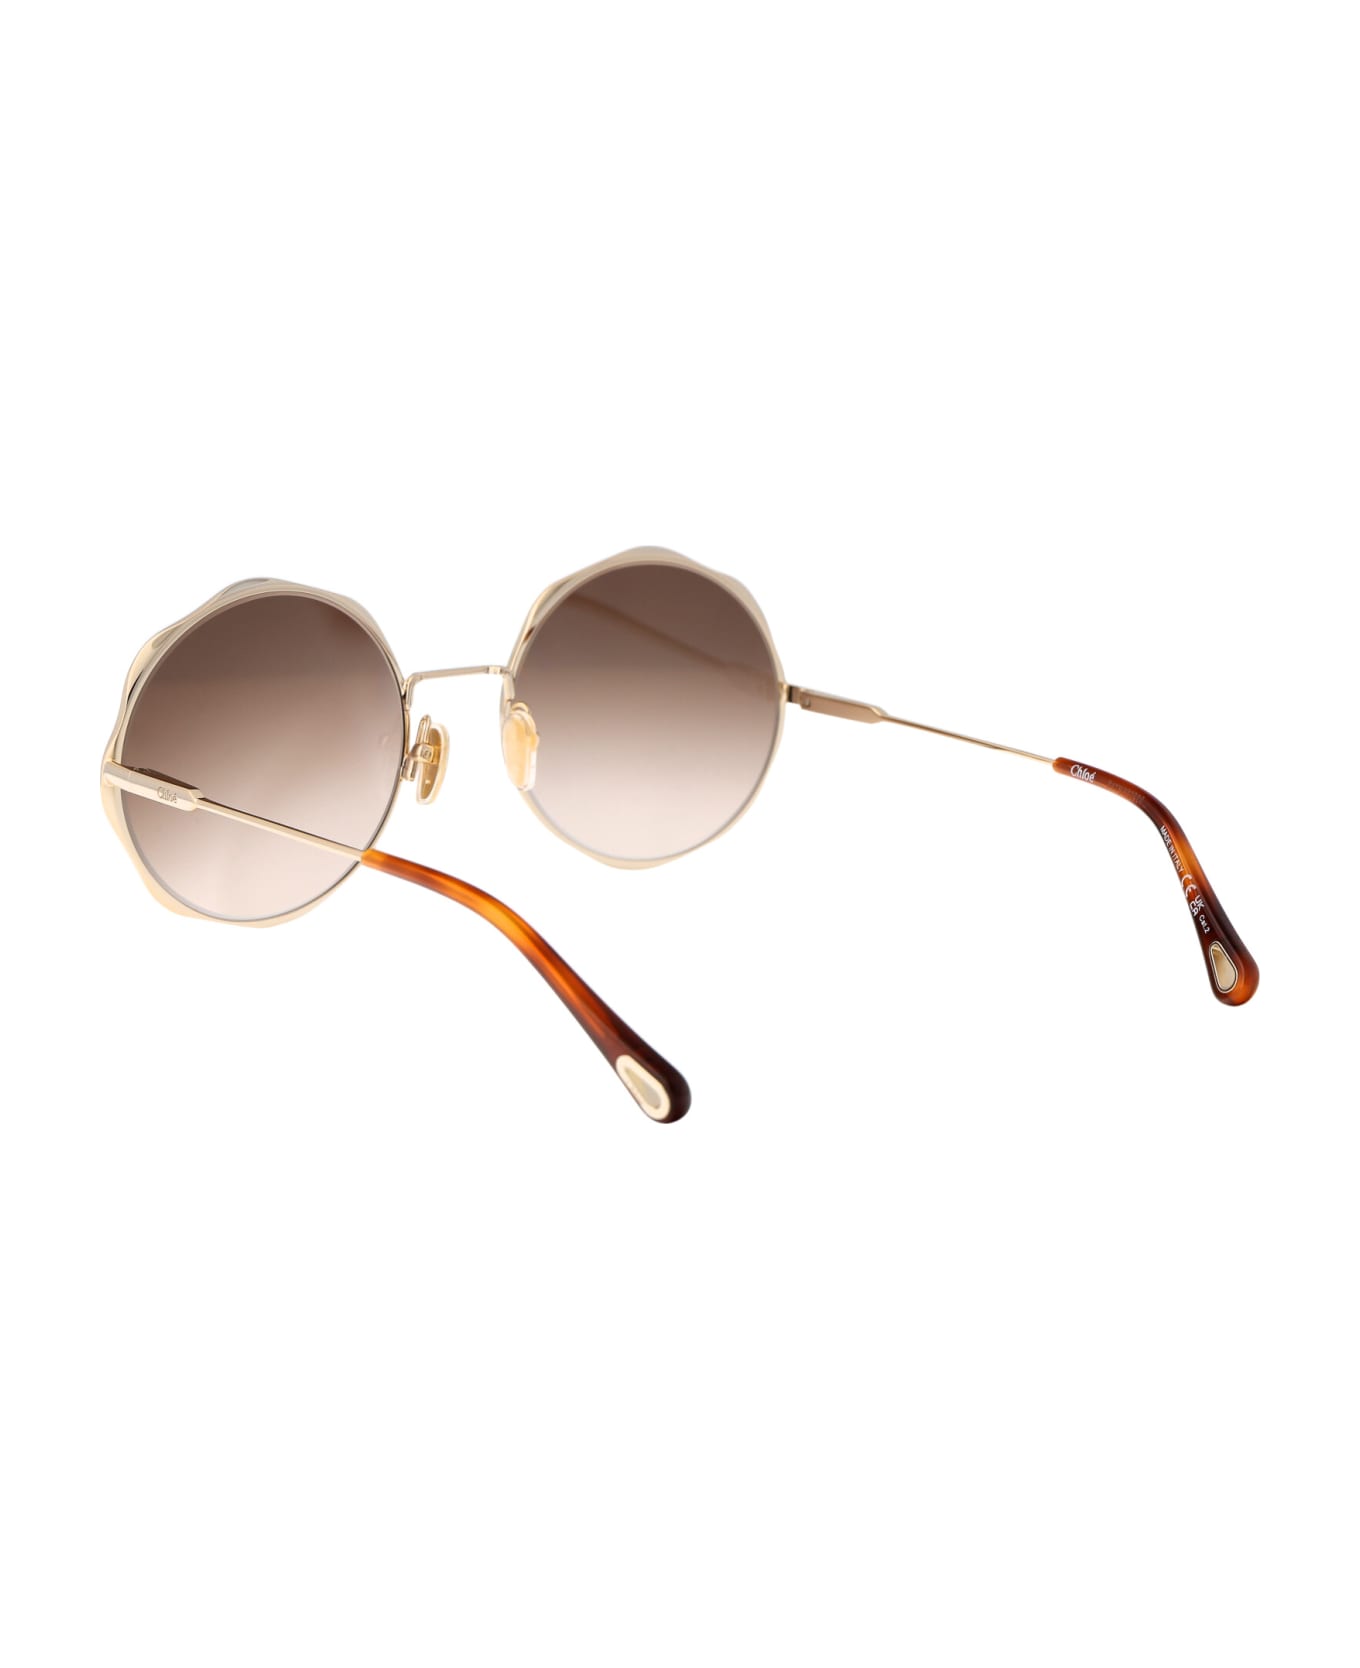 Chloé Eyewear Ch0184s Sunglasses - 002 GOLD GOLD BROWN